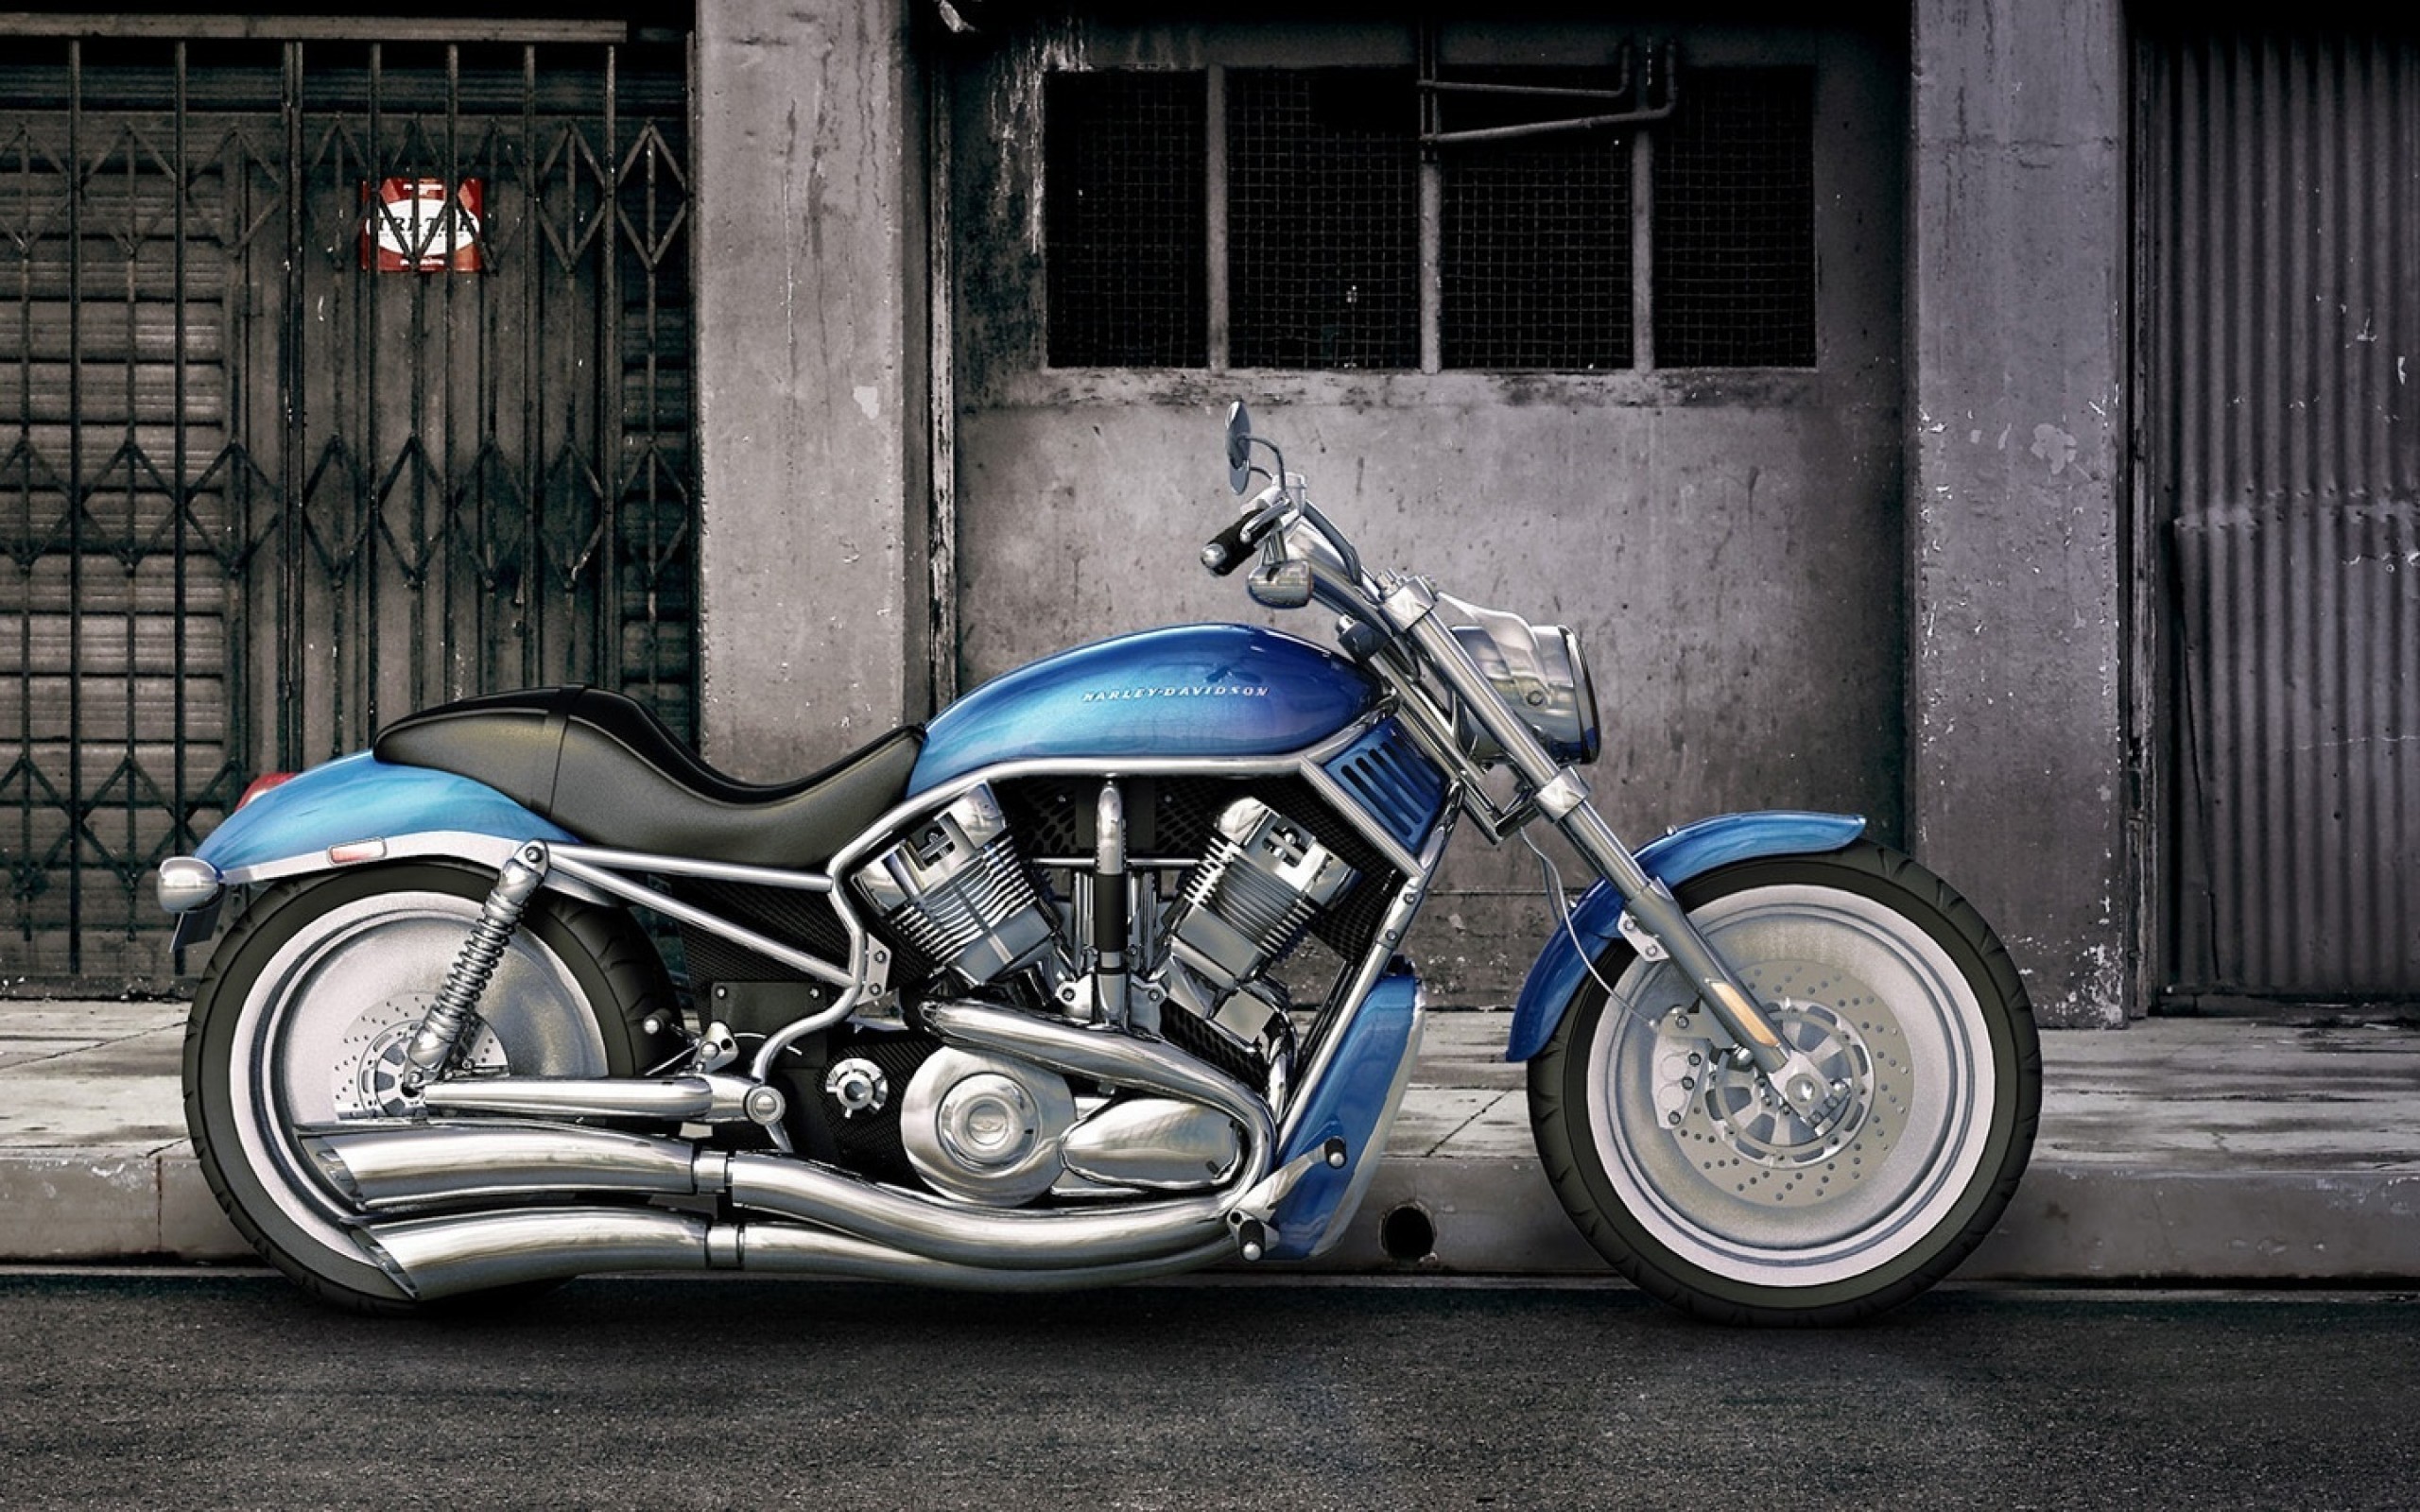 2560x1600 Harley Davidson Motorcycle HD Wallpaper - New HD Wallpapers